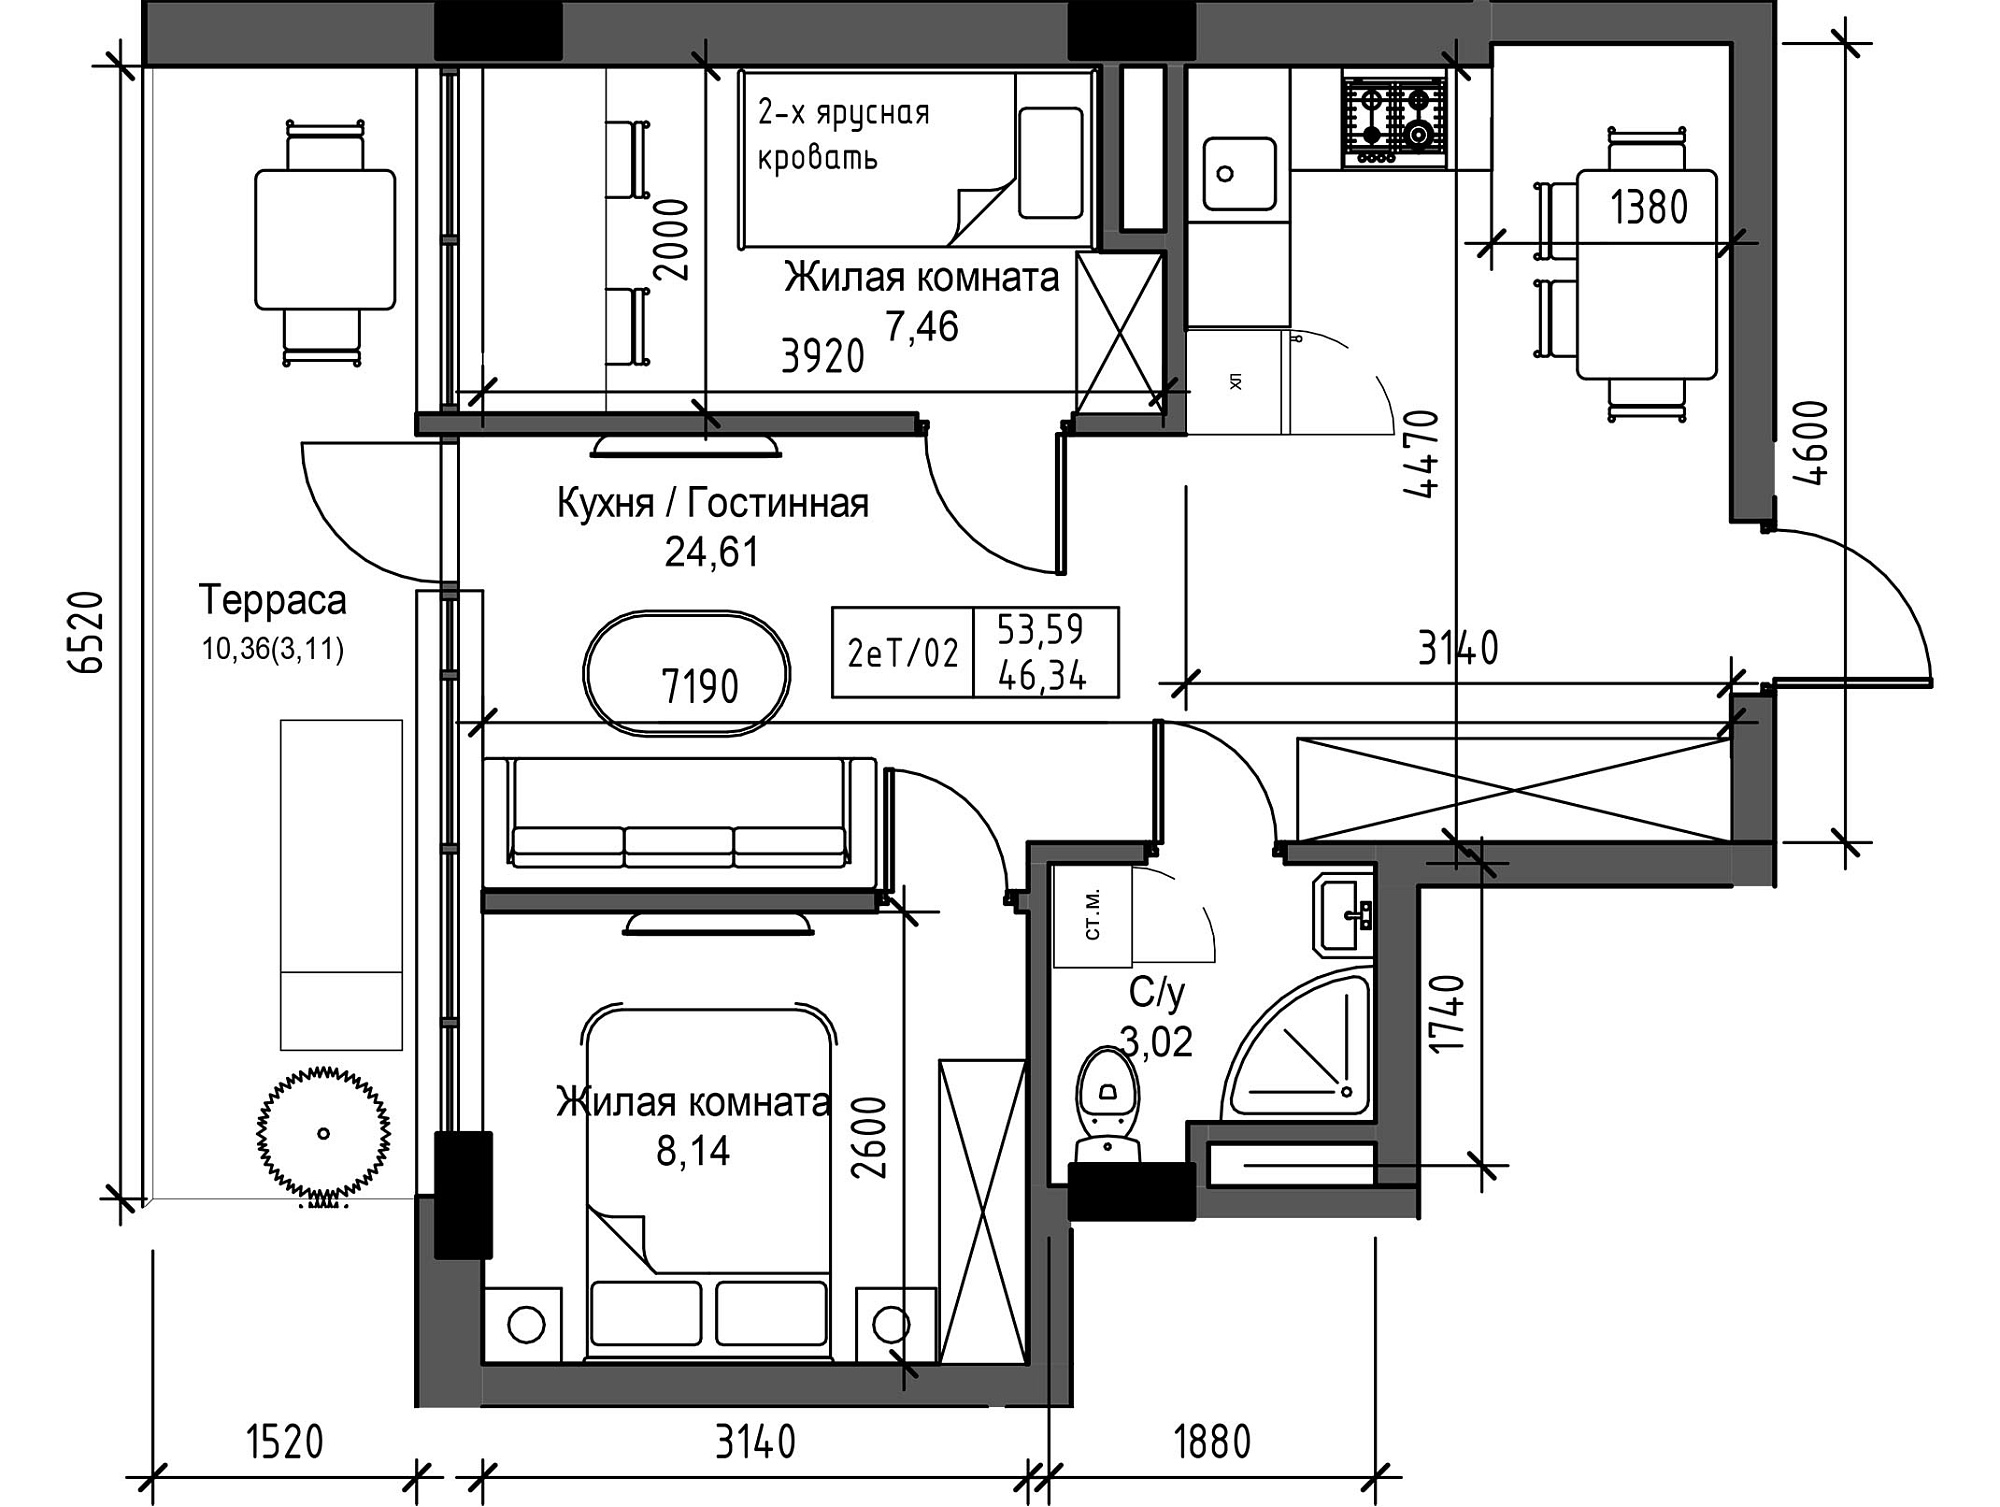 Planning 2-rm flats area 43.32m2, UM-003-11/0118.